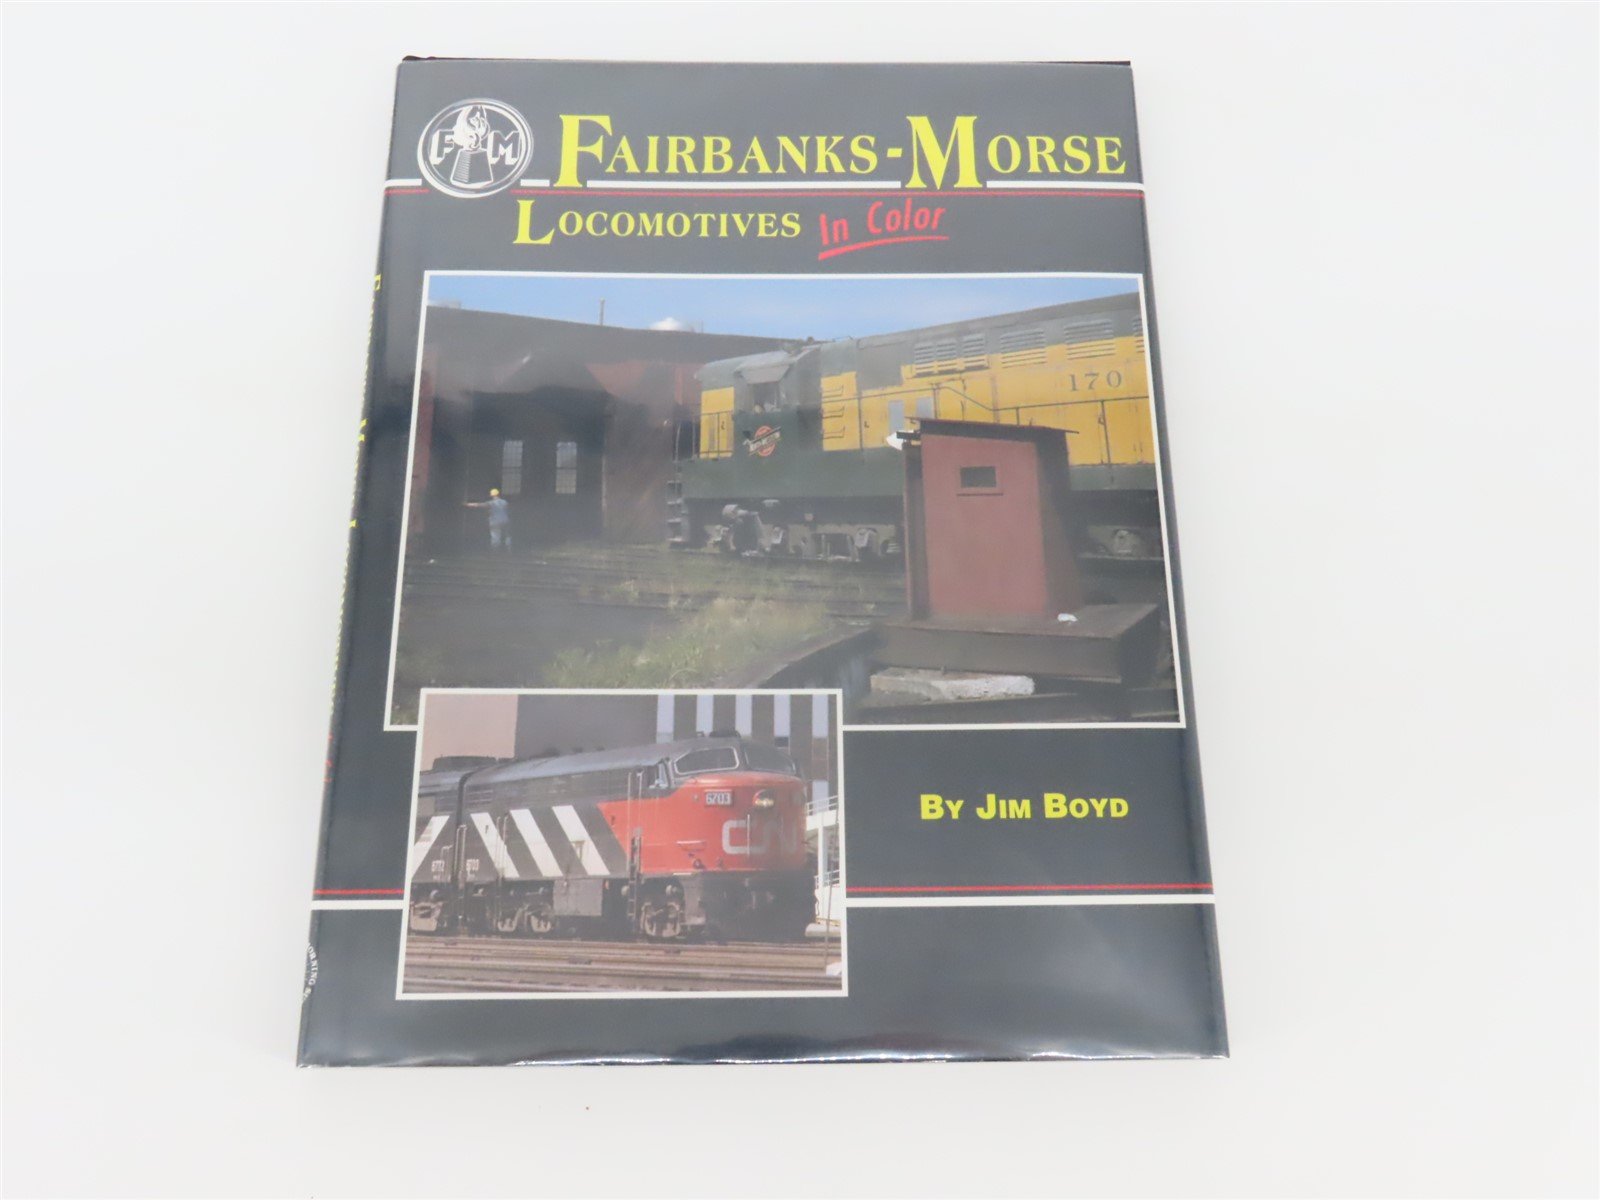 Morning Sun: Fairbanks-Morse Locomotives In Color by Jim Boyd ©1996 HC Book